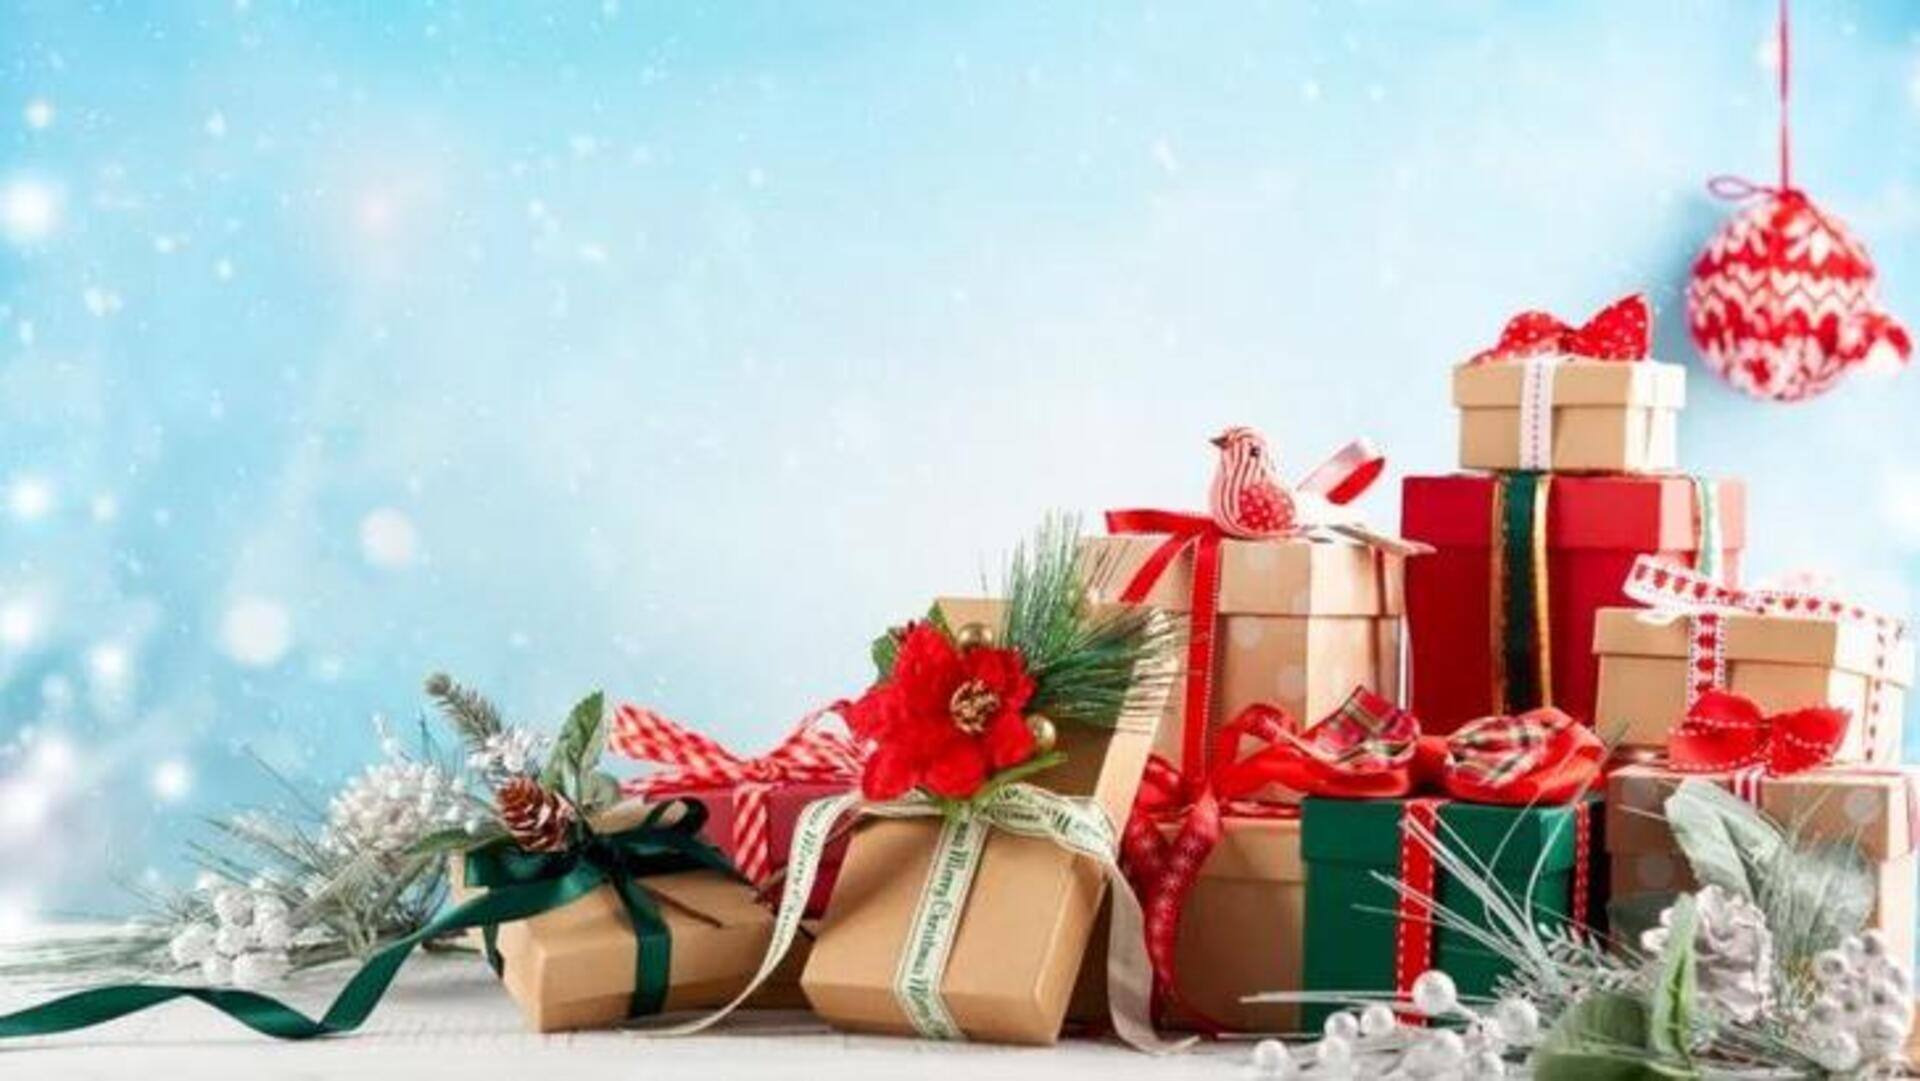 Christmas Gift Ideas : క్రిస్మస్‌కి ఇవ్వదగ్గ బెస్ట్ గిఫ్ట్స్ ఇవే.. అన్నీ తక్కువ బడ్జెట్‌లోనే! 